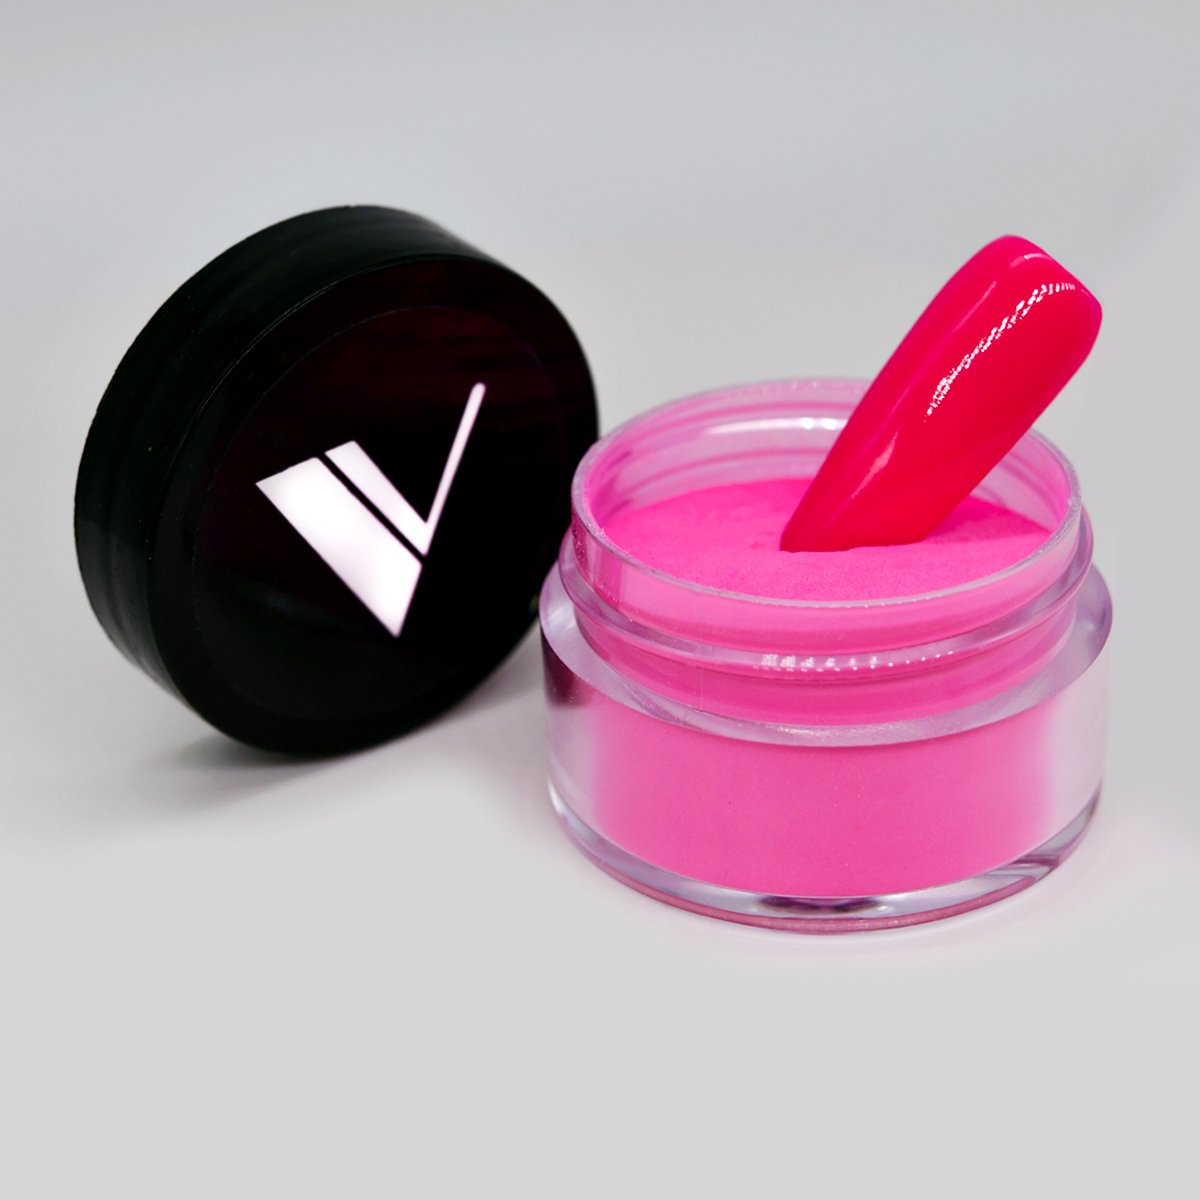 Acrylic Powder - Acrylic System by Valentino Beauty Pure - 123 Cali Girl